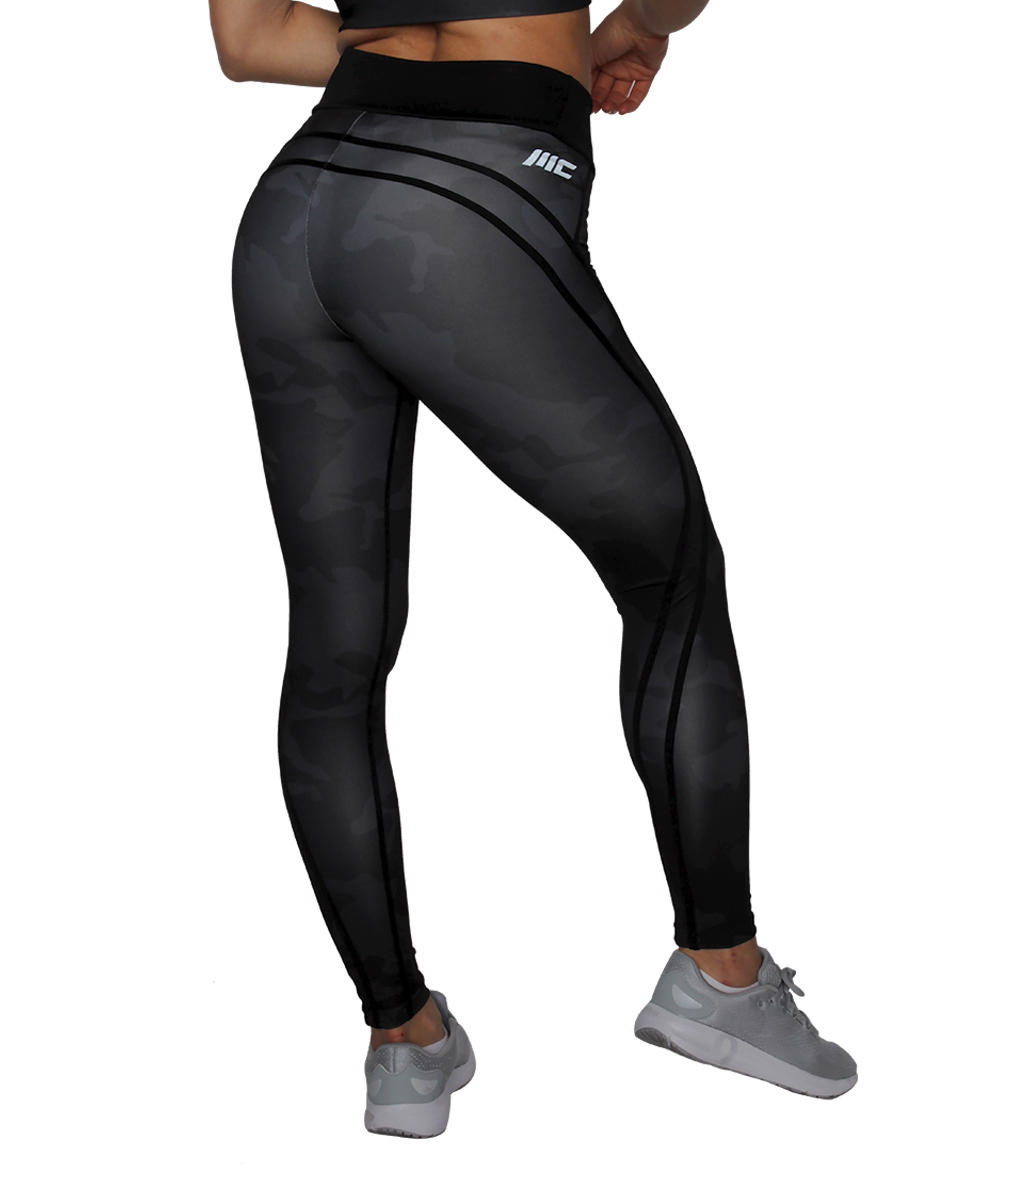 MuscleCloth Dora Spor Tayt + Dora Sporcu Sütyeni Siyah Kamuflaj